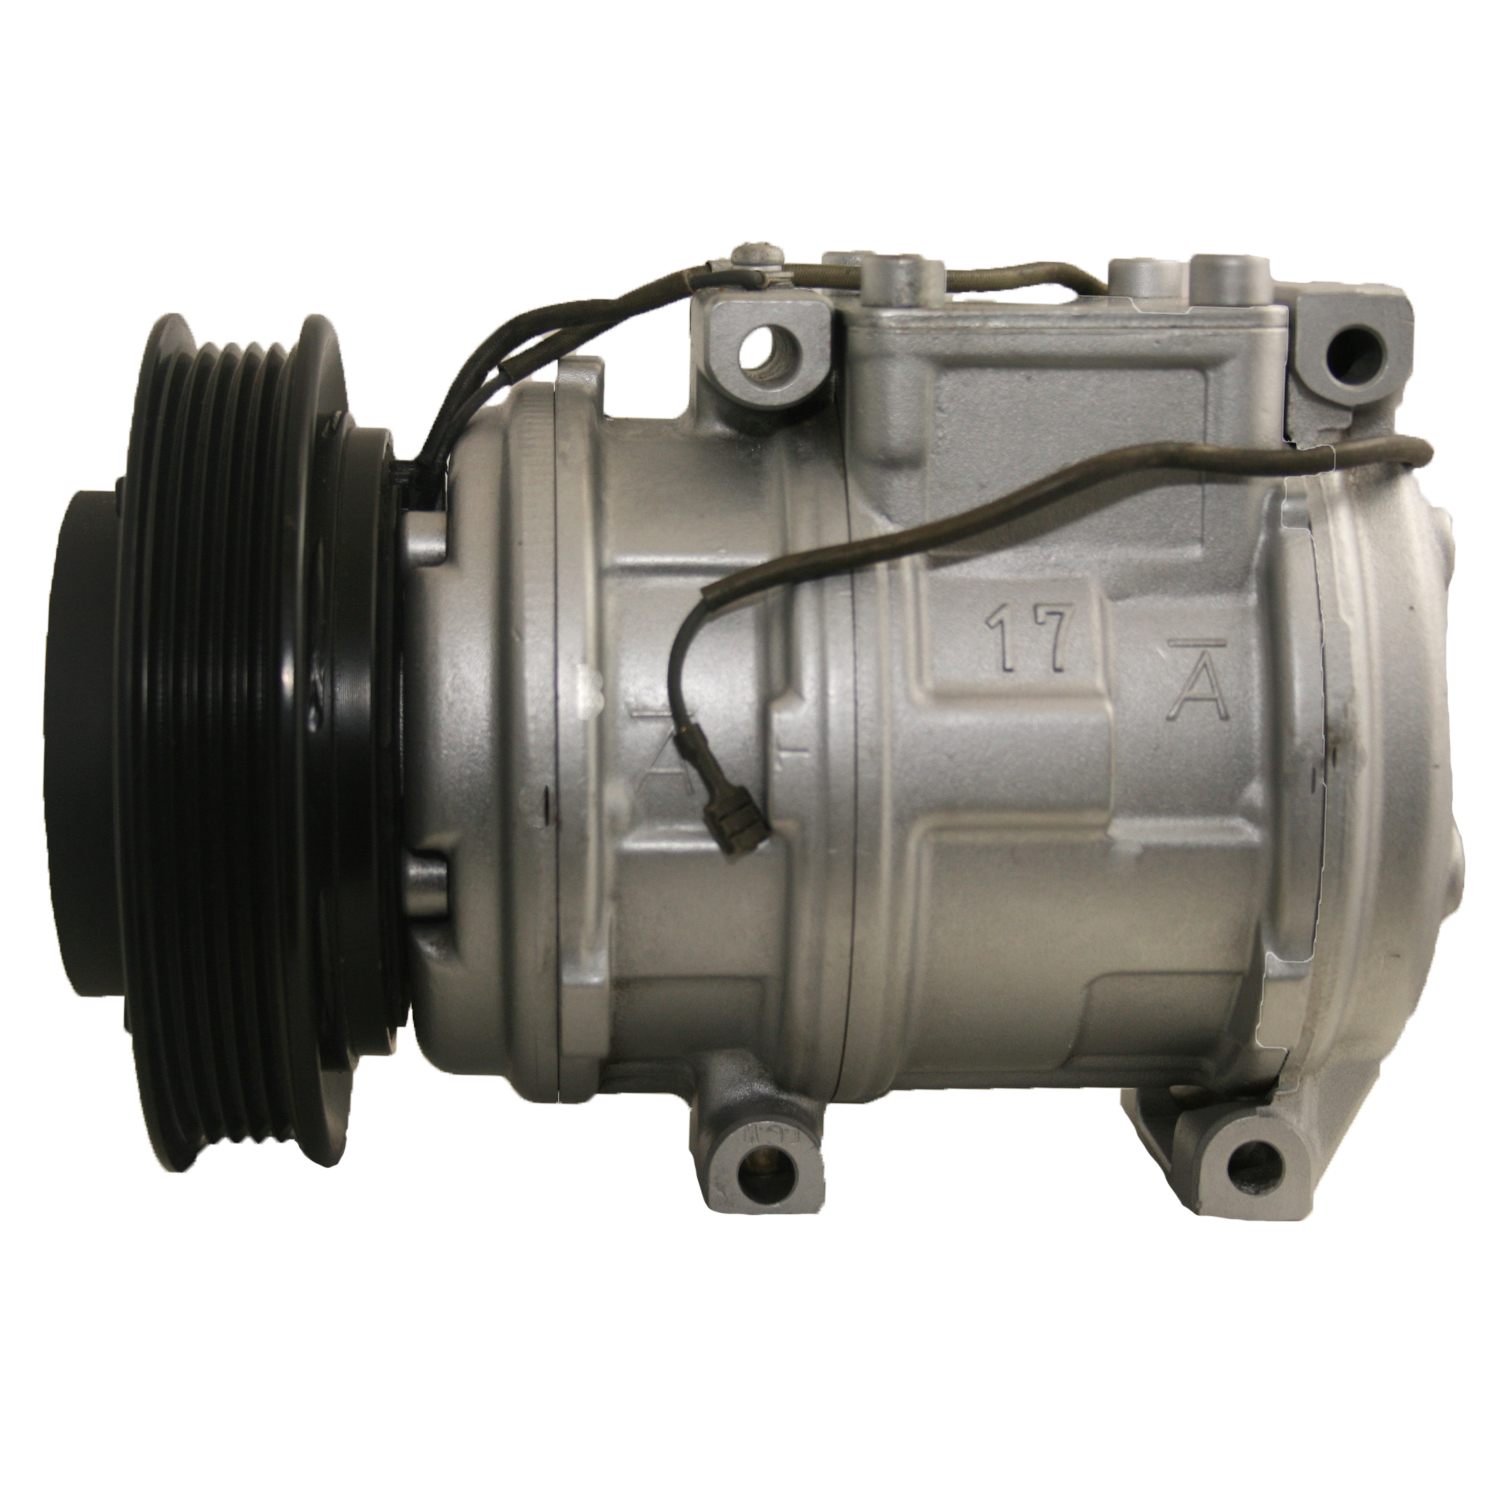 TCW Compressor 31270.503 Remanufactured